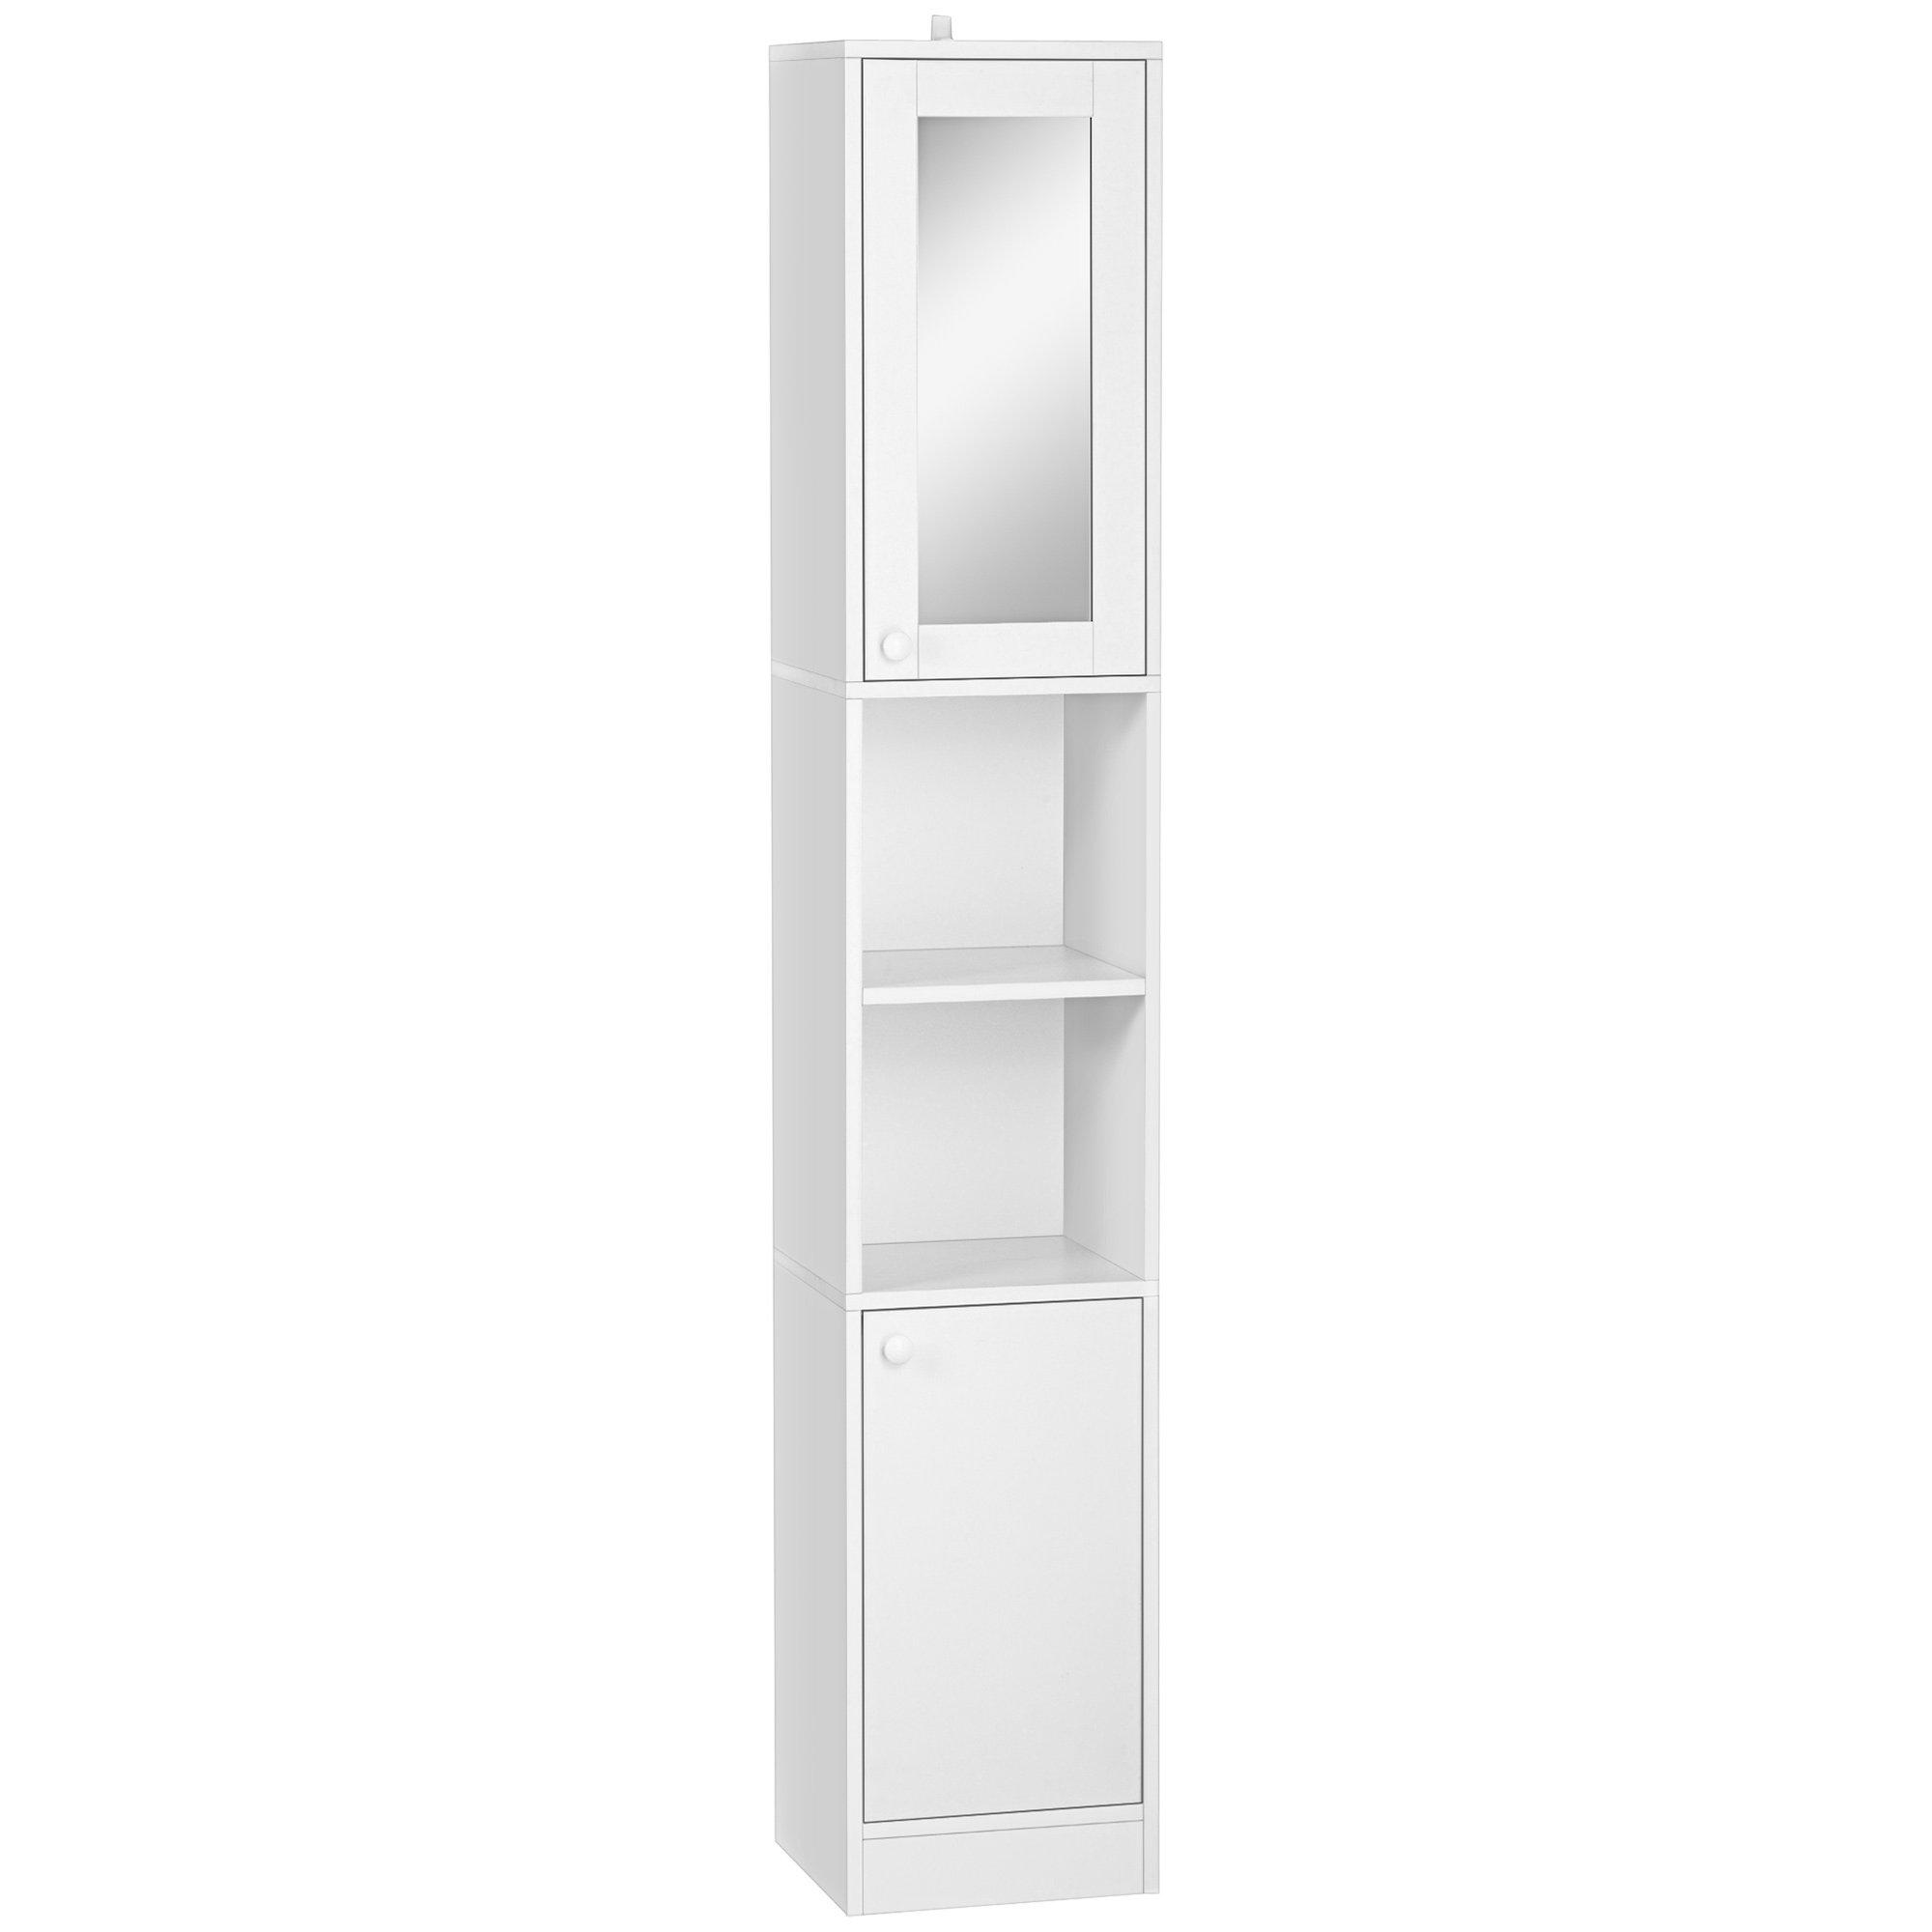 Tall Bathroom Storage Cabinet Narrow Freestanding Cabinet